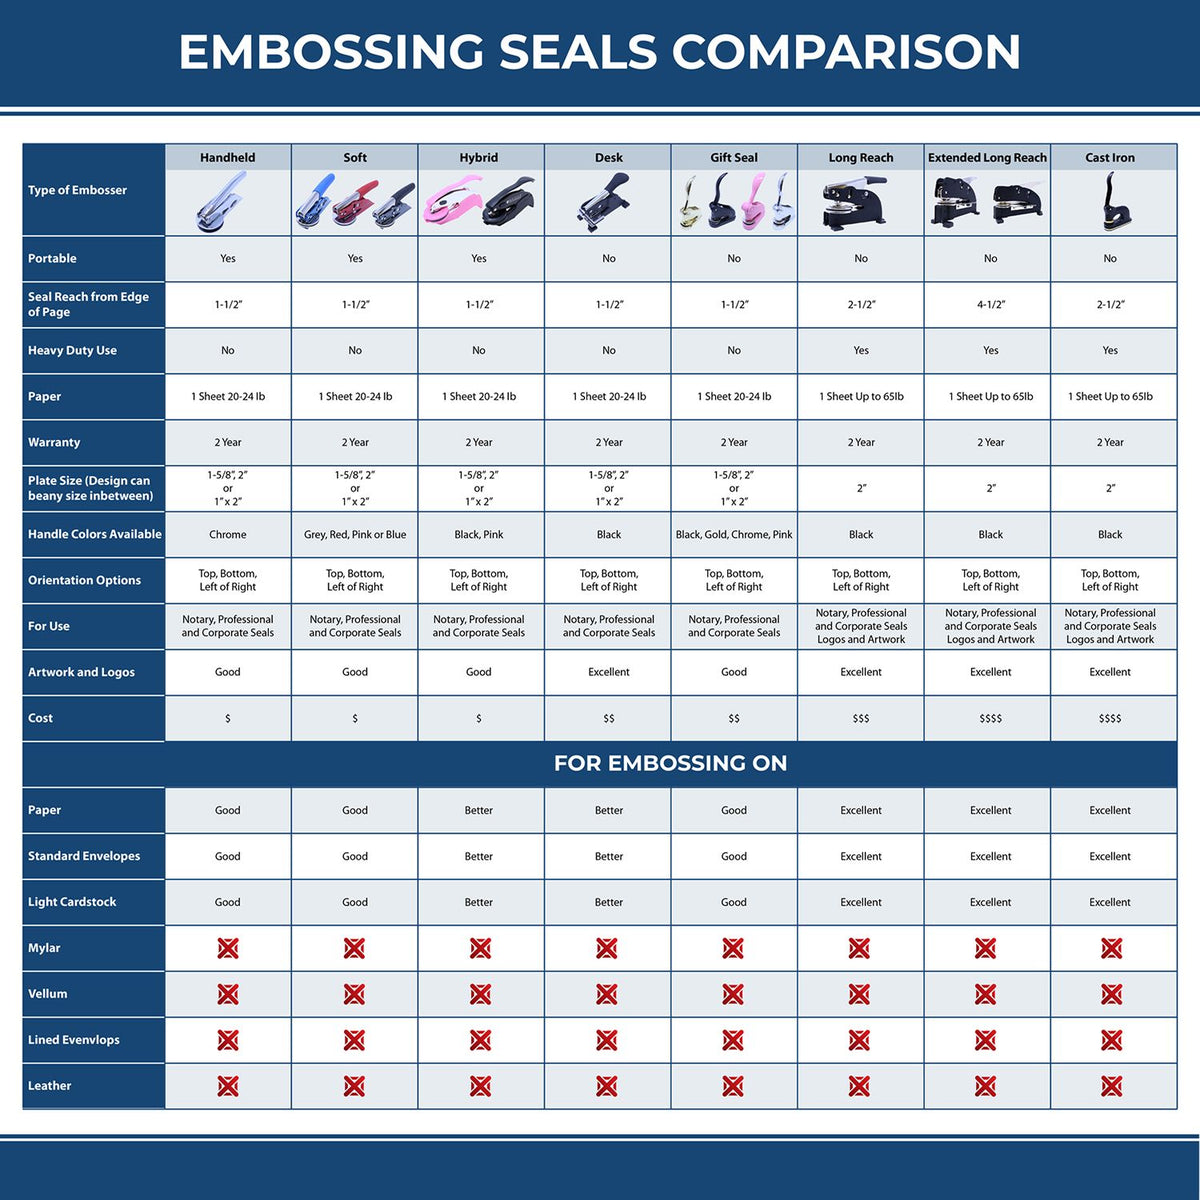 Public Weighmaster Pink Hybrid Handheld Embosser 3039WE Embossing Seal Comparison